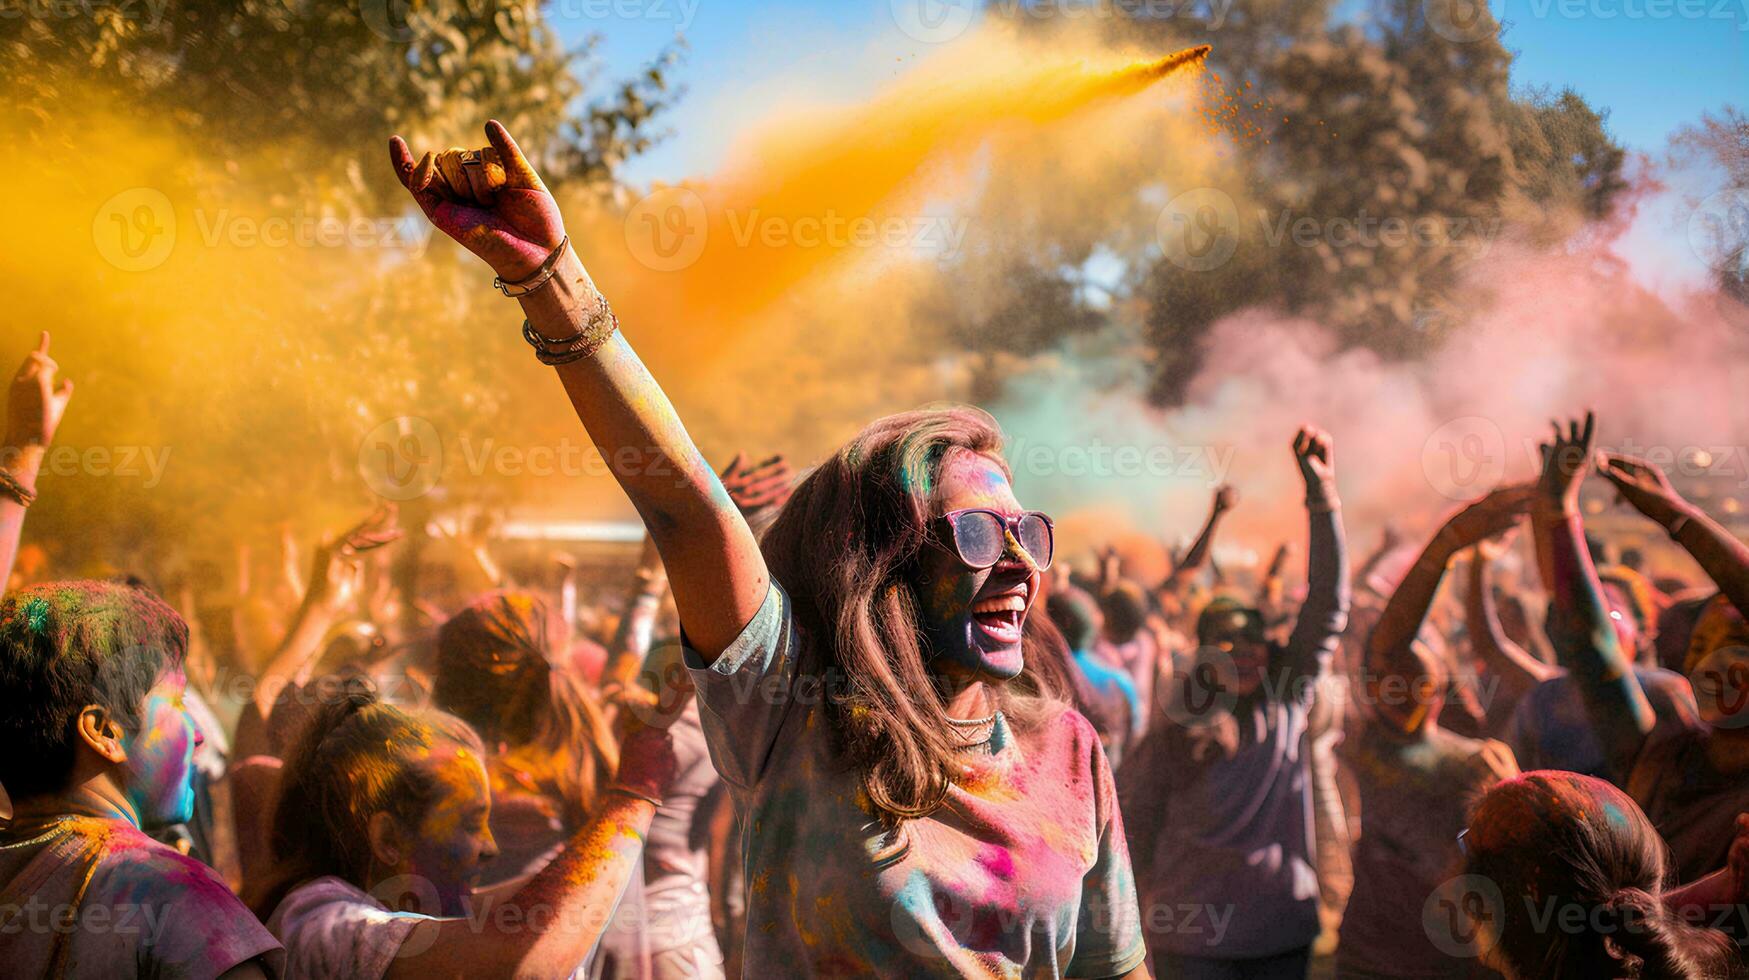 People celebrating the Holi festival of colors photo